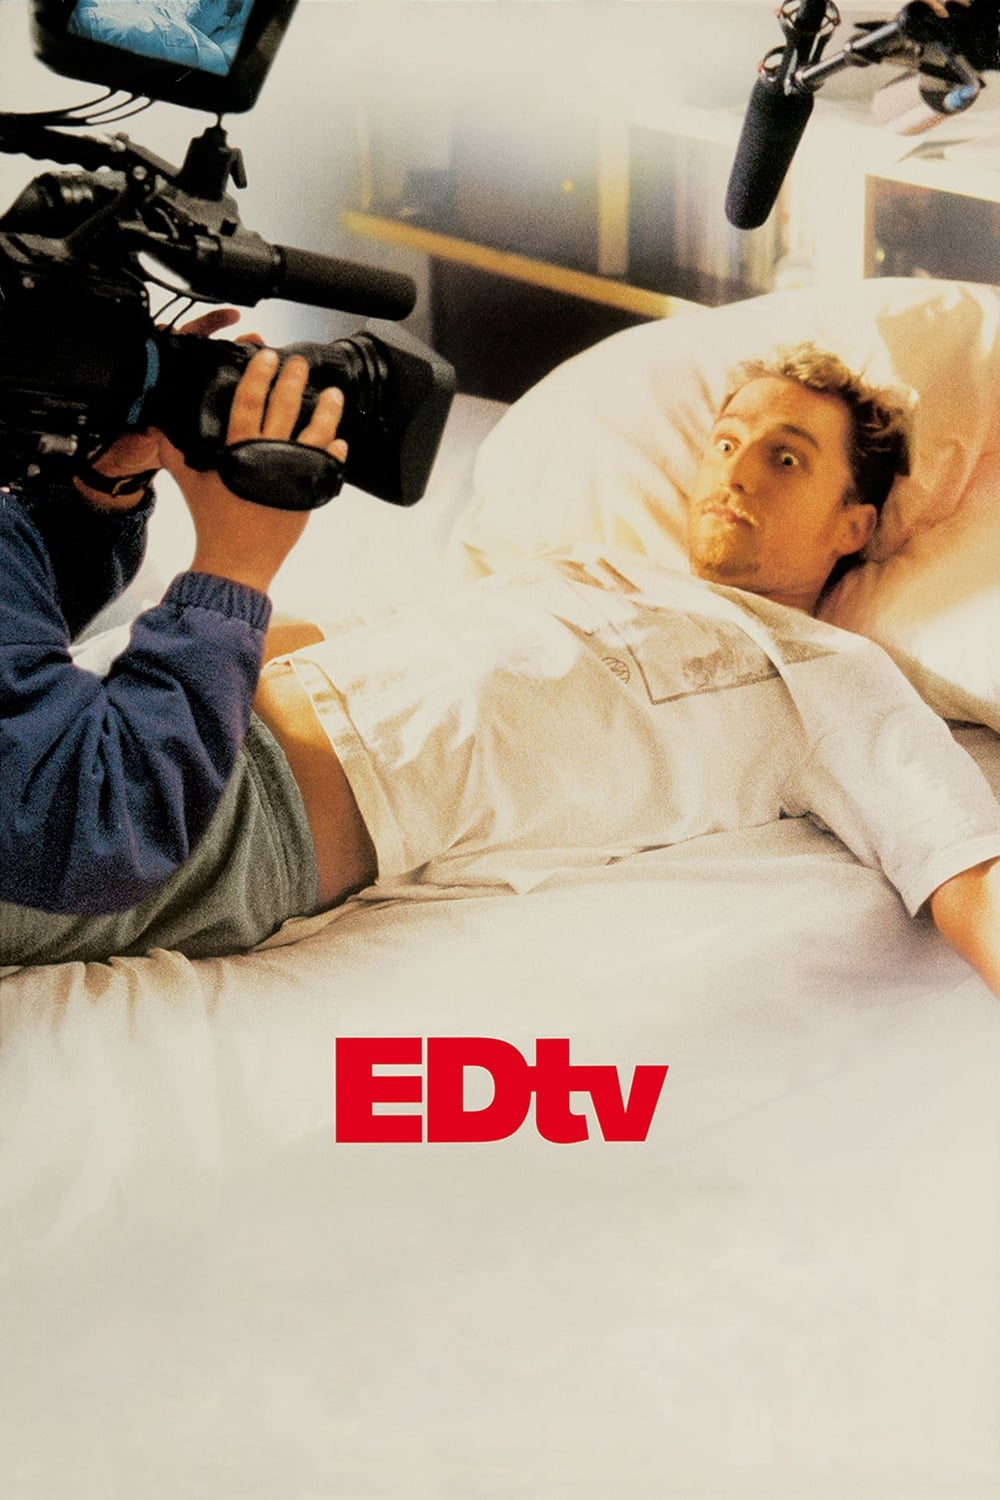 Edtv (1999)